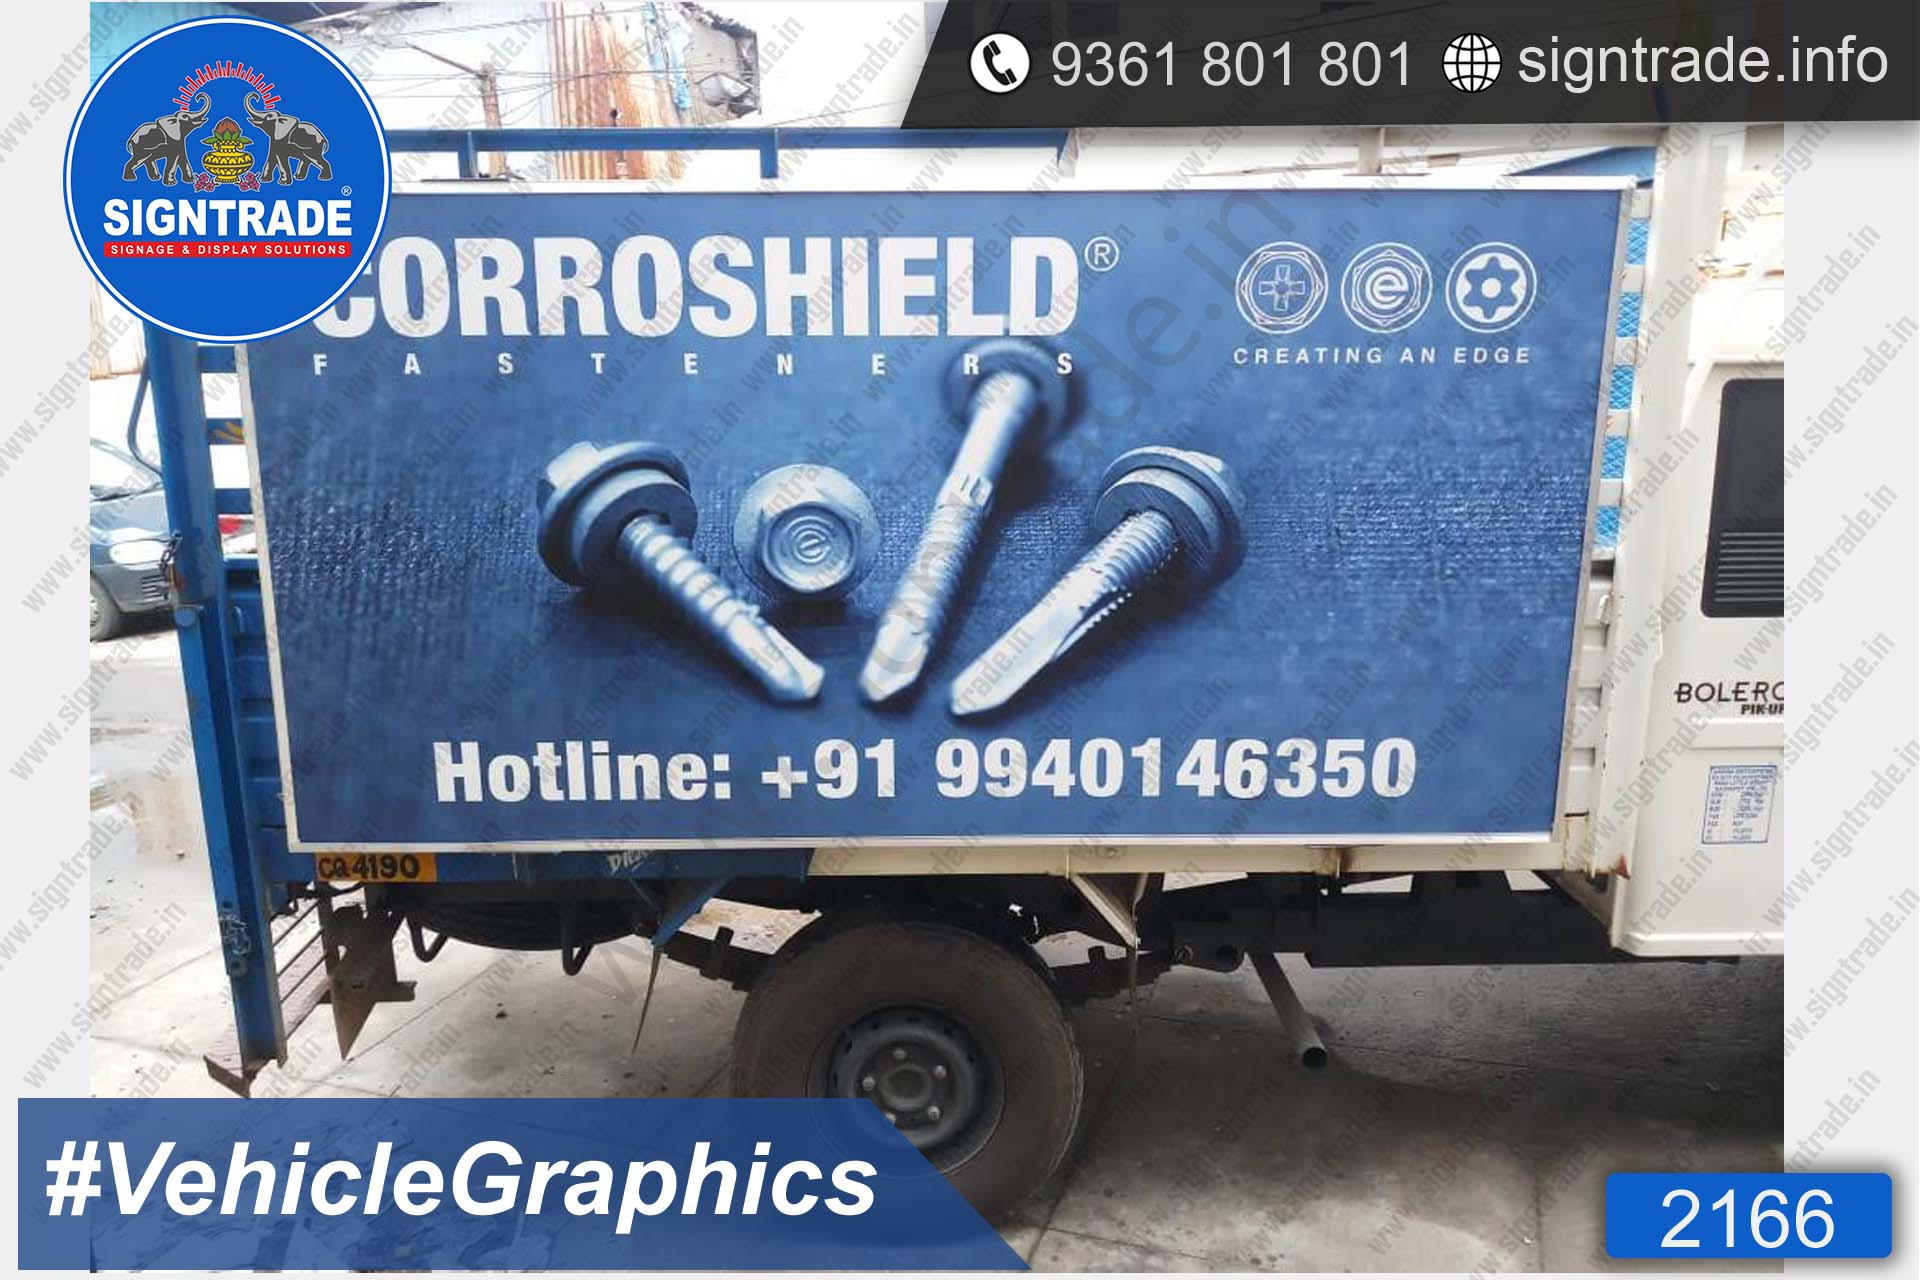 Corroshield Vehicle Graphics